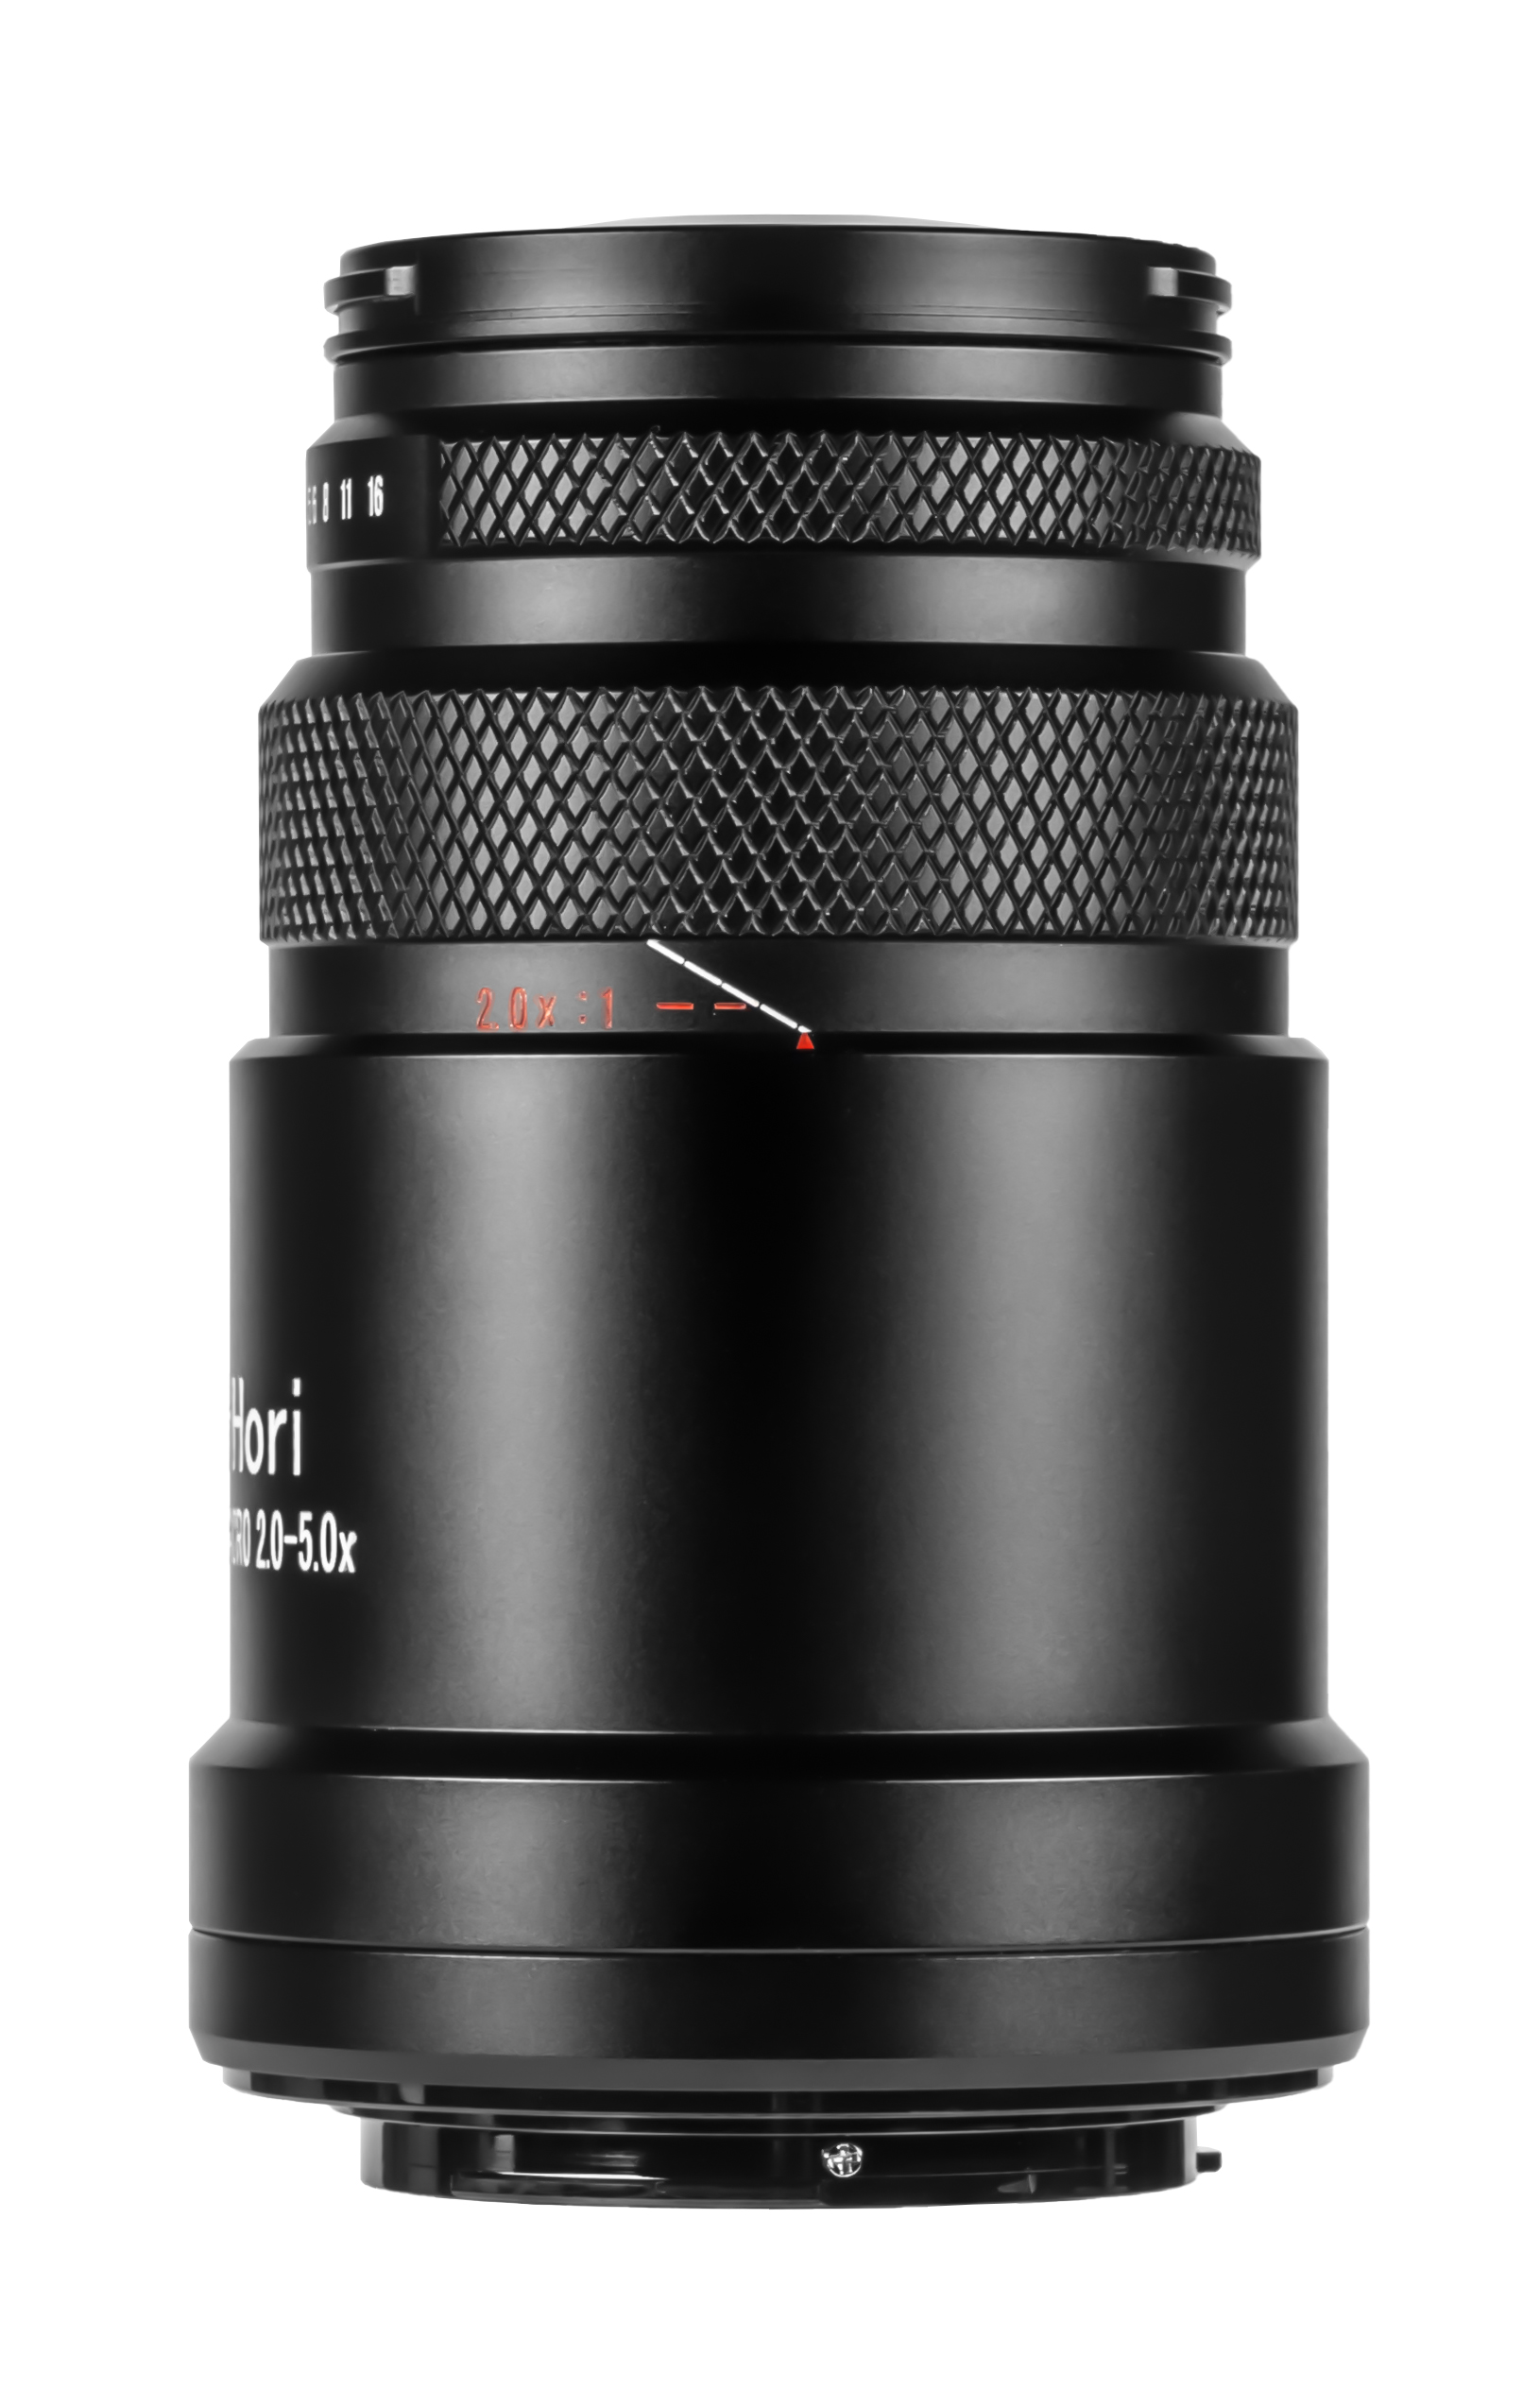 DSC03518 - AstrHori to launch RF 25mm f/2.8 2x-5x Macro Lens for $249